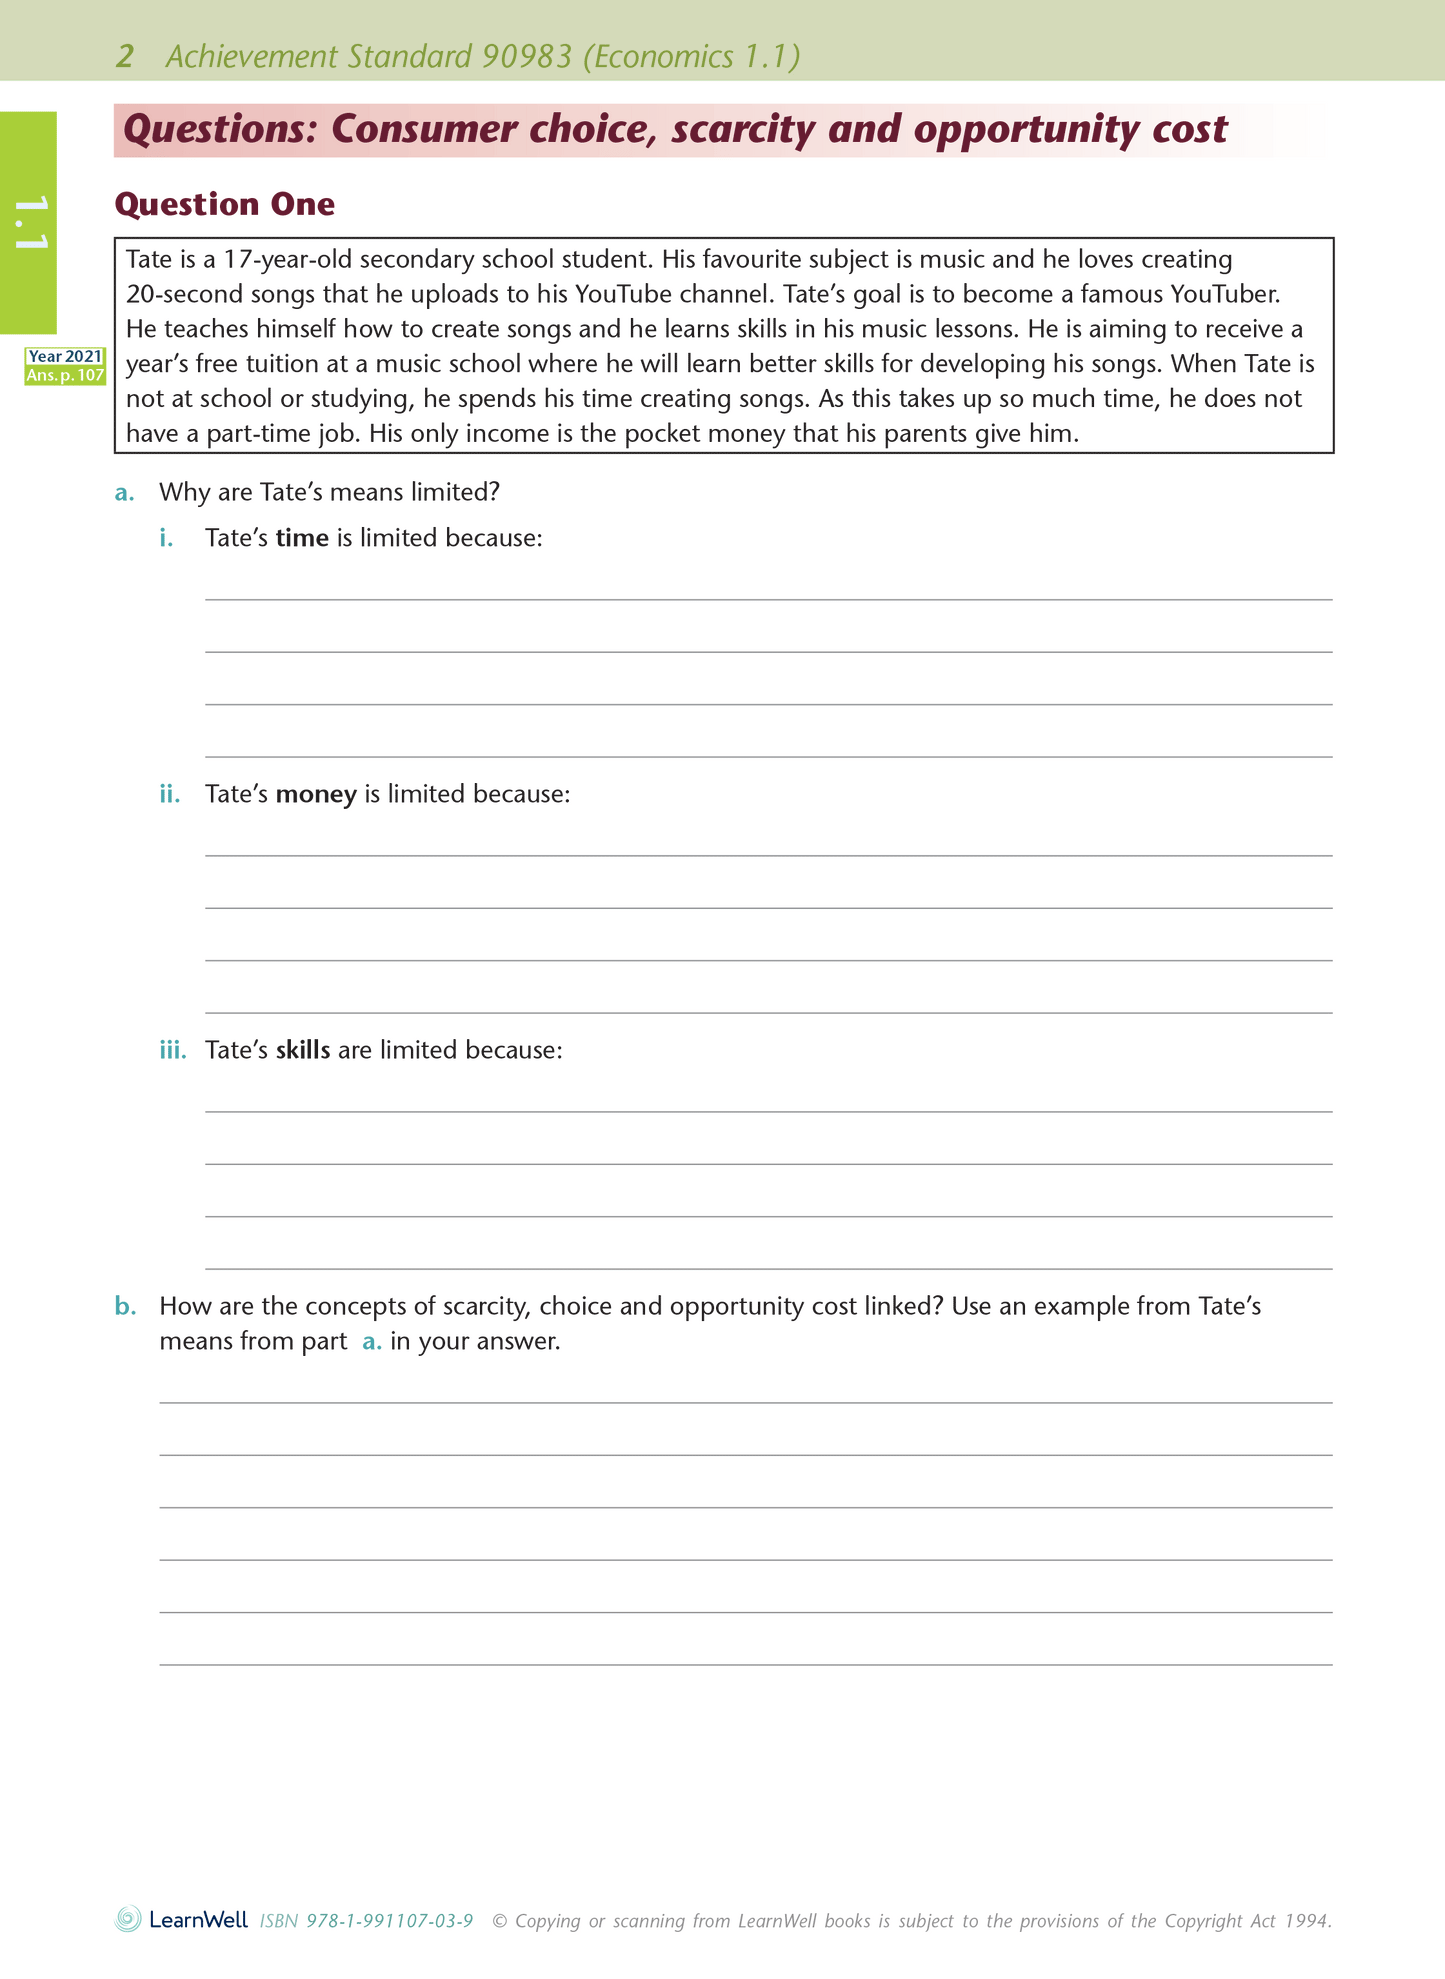 Level 1 Economics AME Workbook